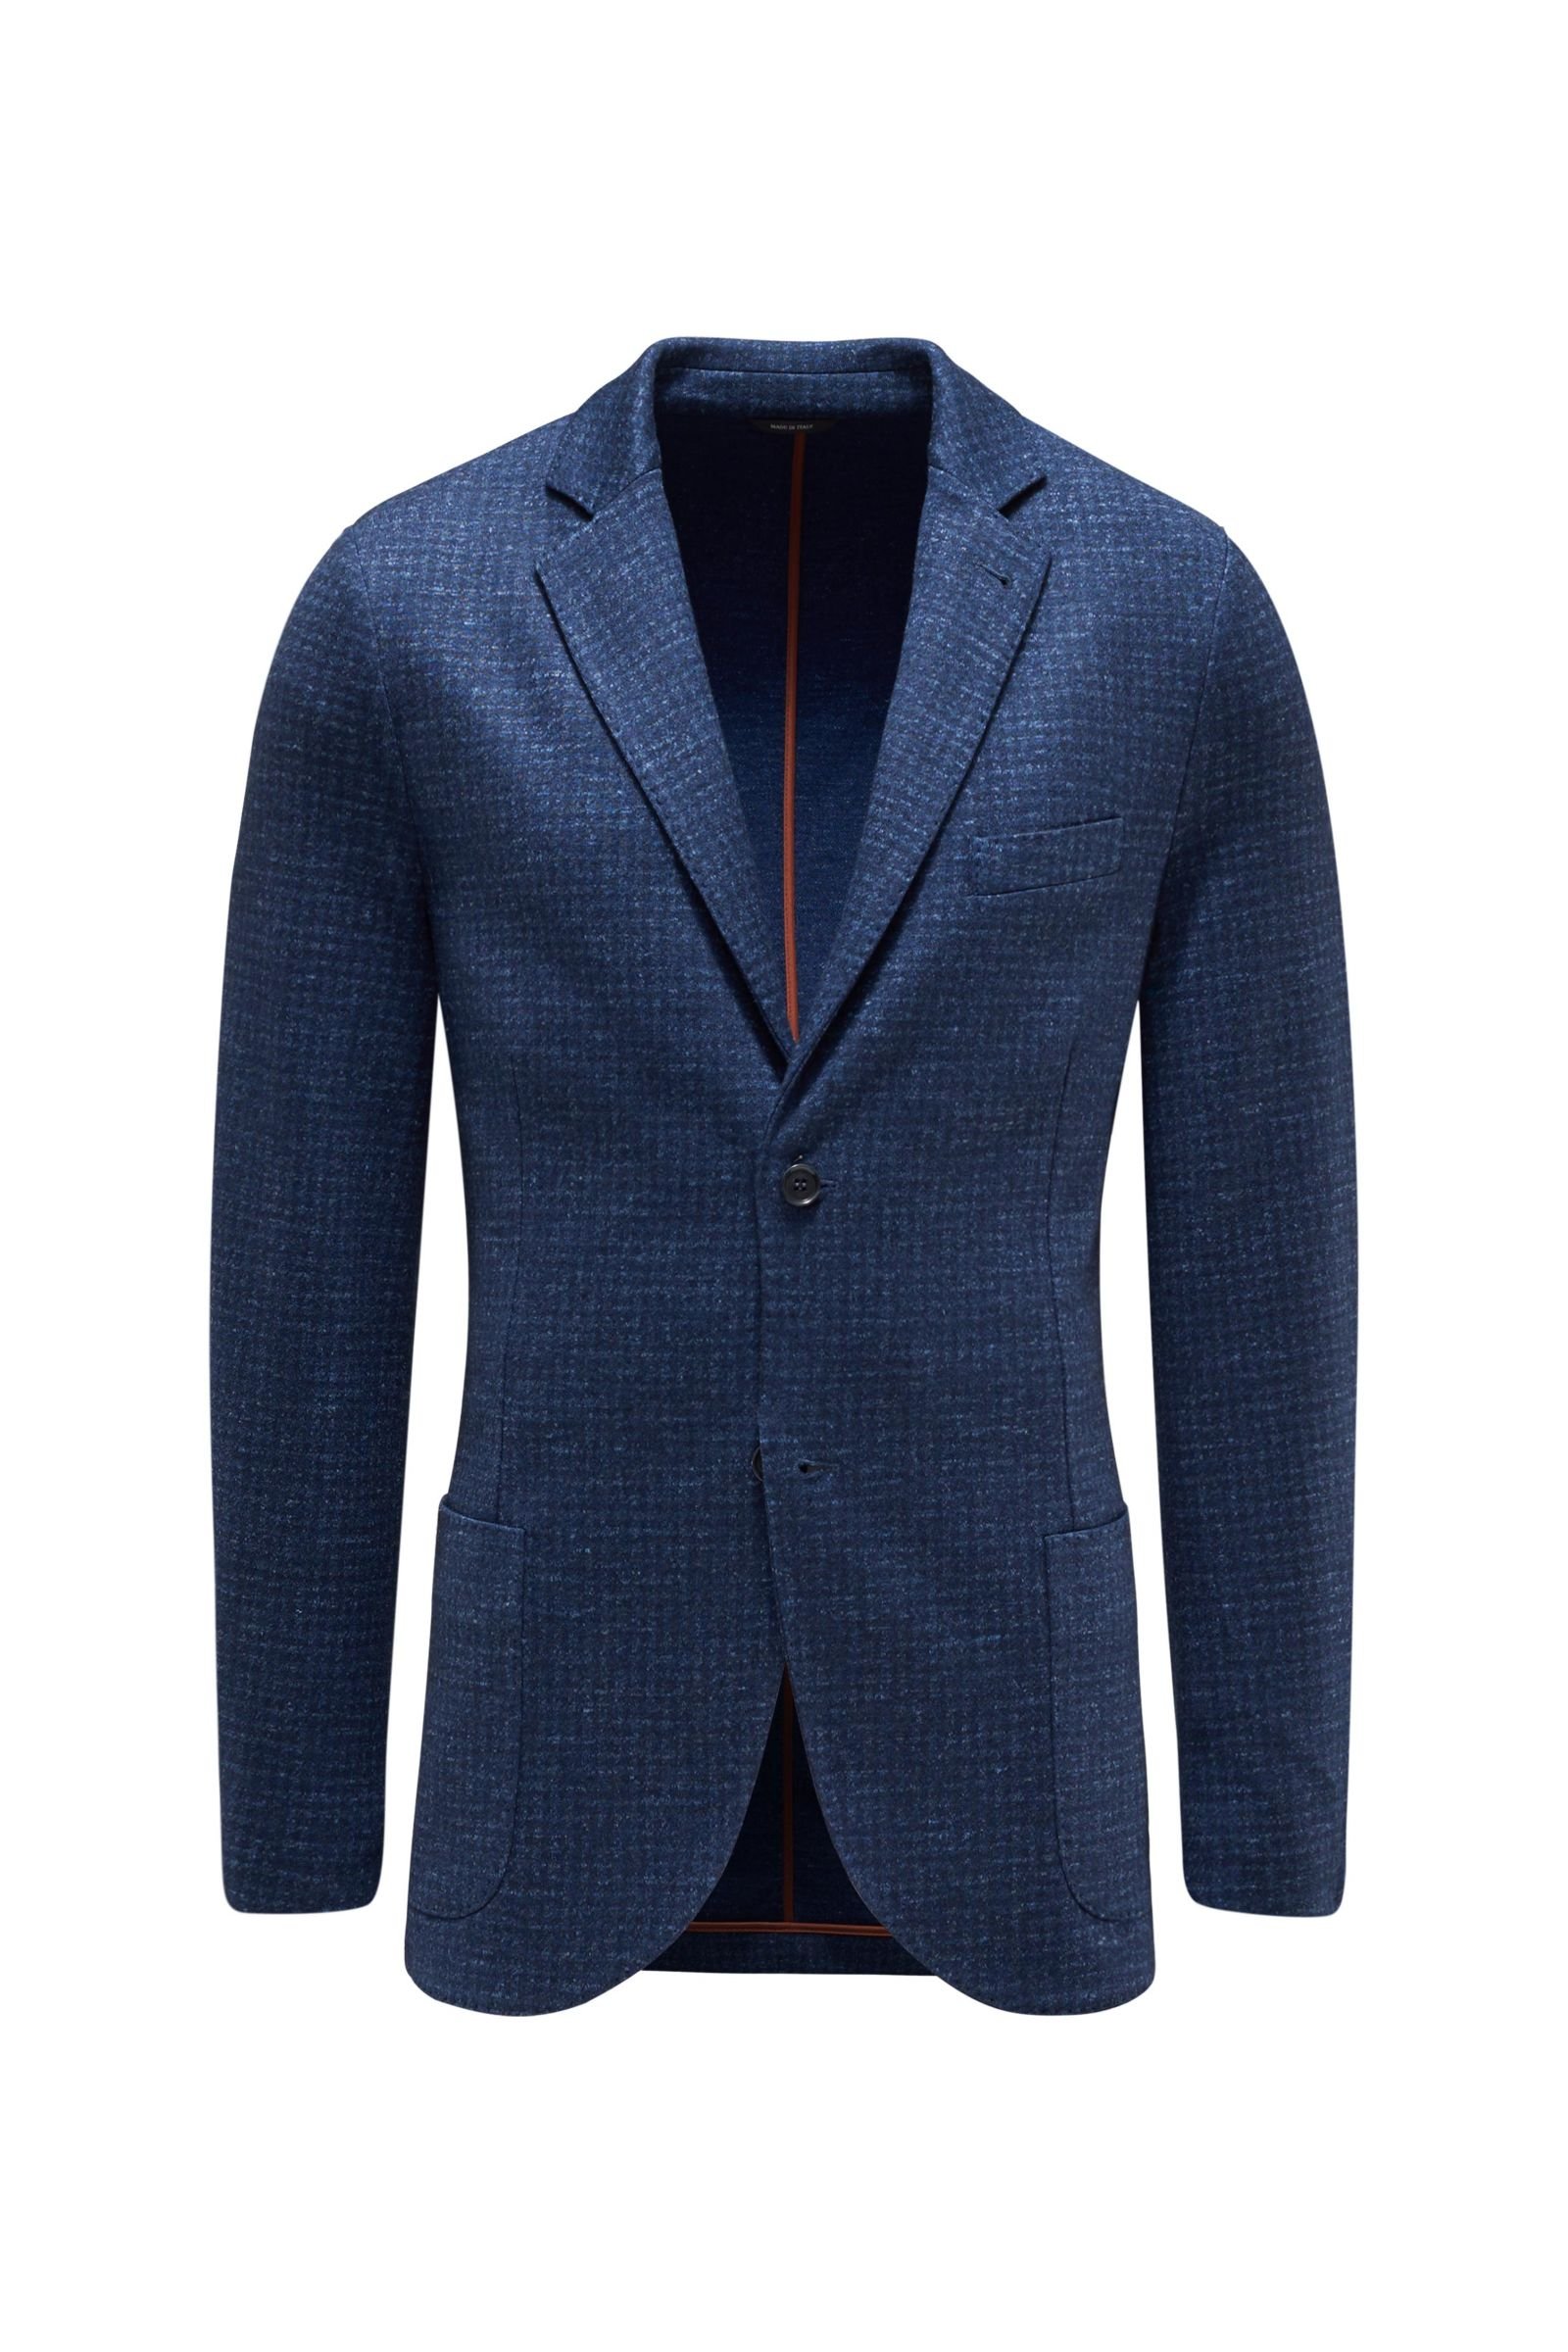 Jersey jacket 'Cash' dark blue patterned